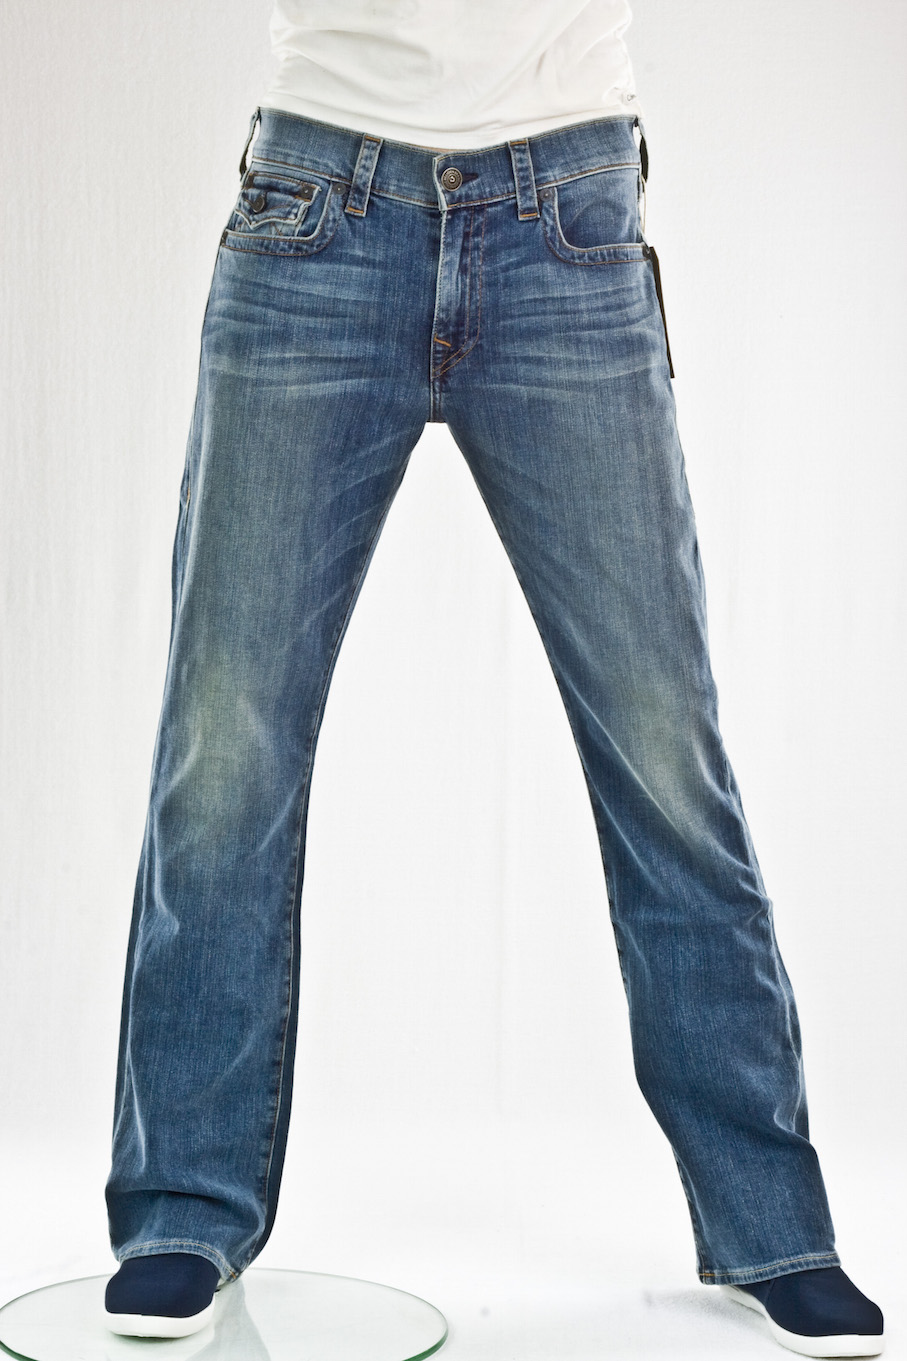 джинсы мужские True Religion широкие "Буткат" Billy wflap bootcut core